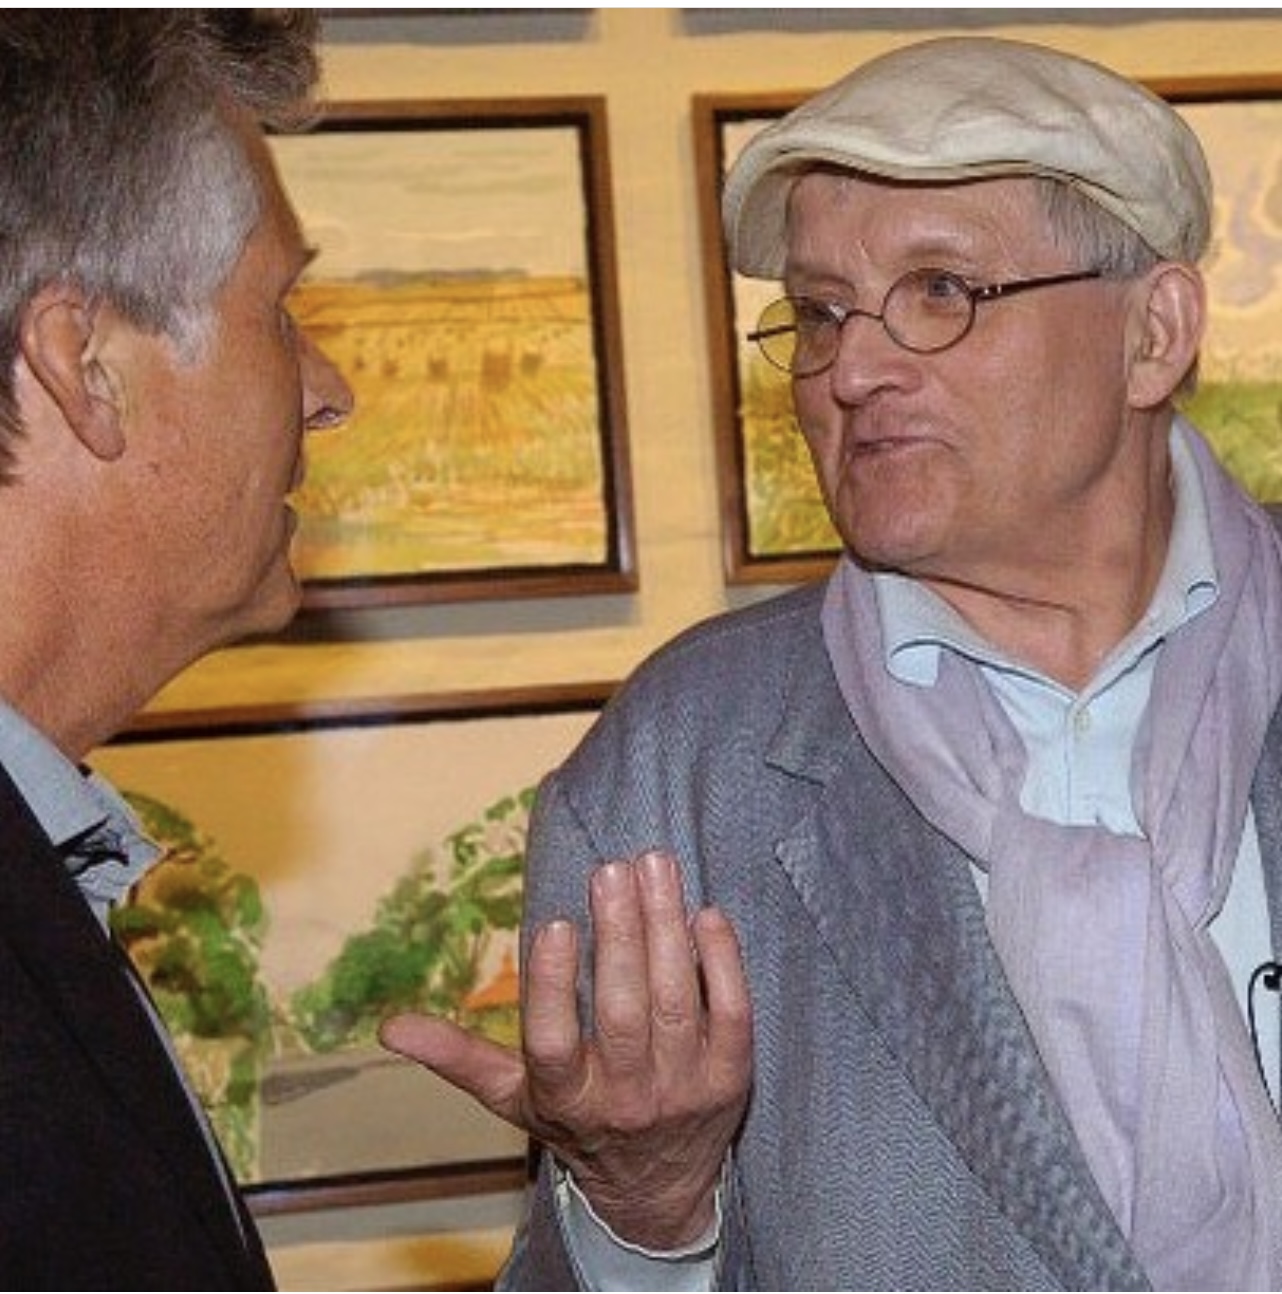 Alan hydes  with David Hockney